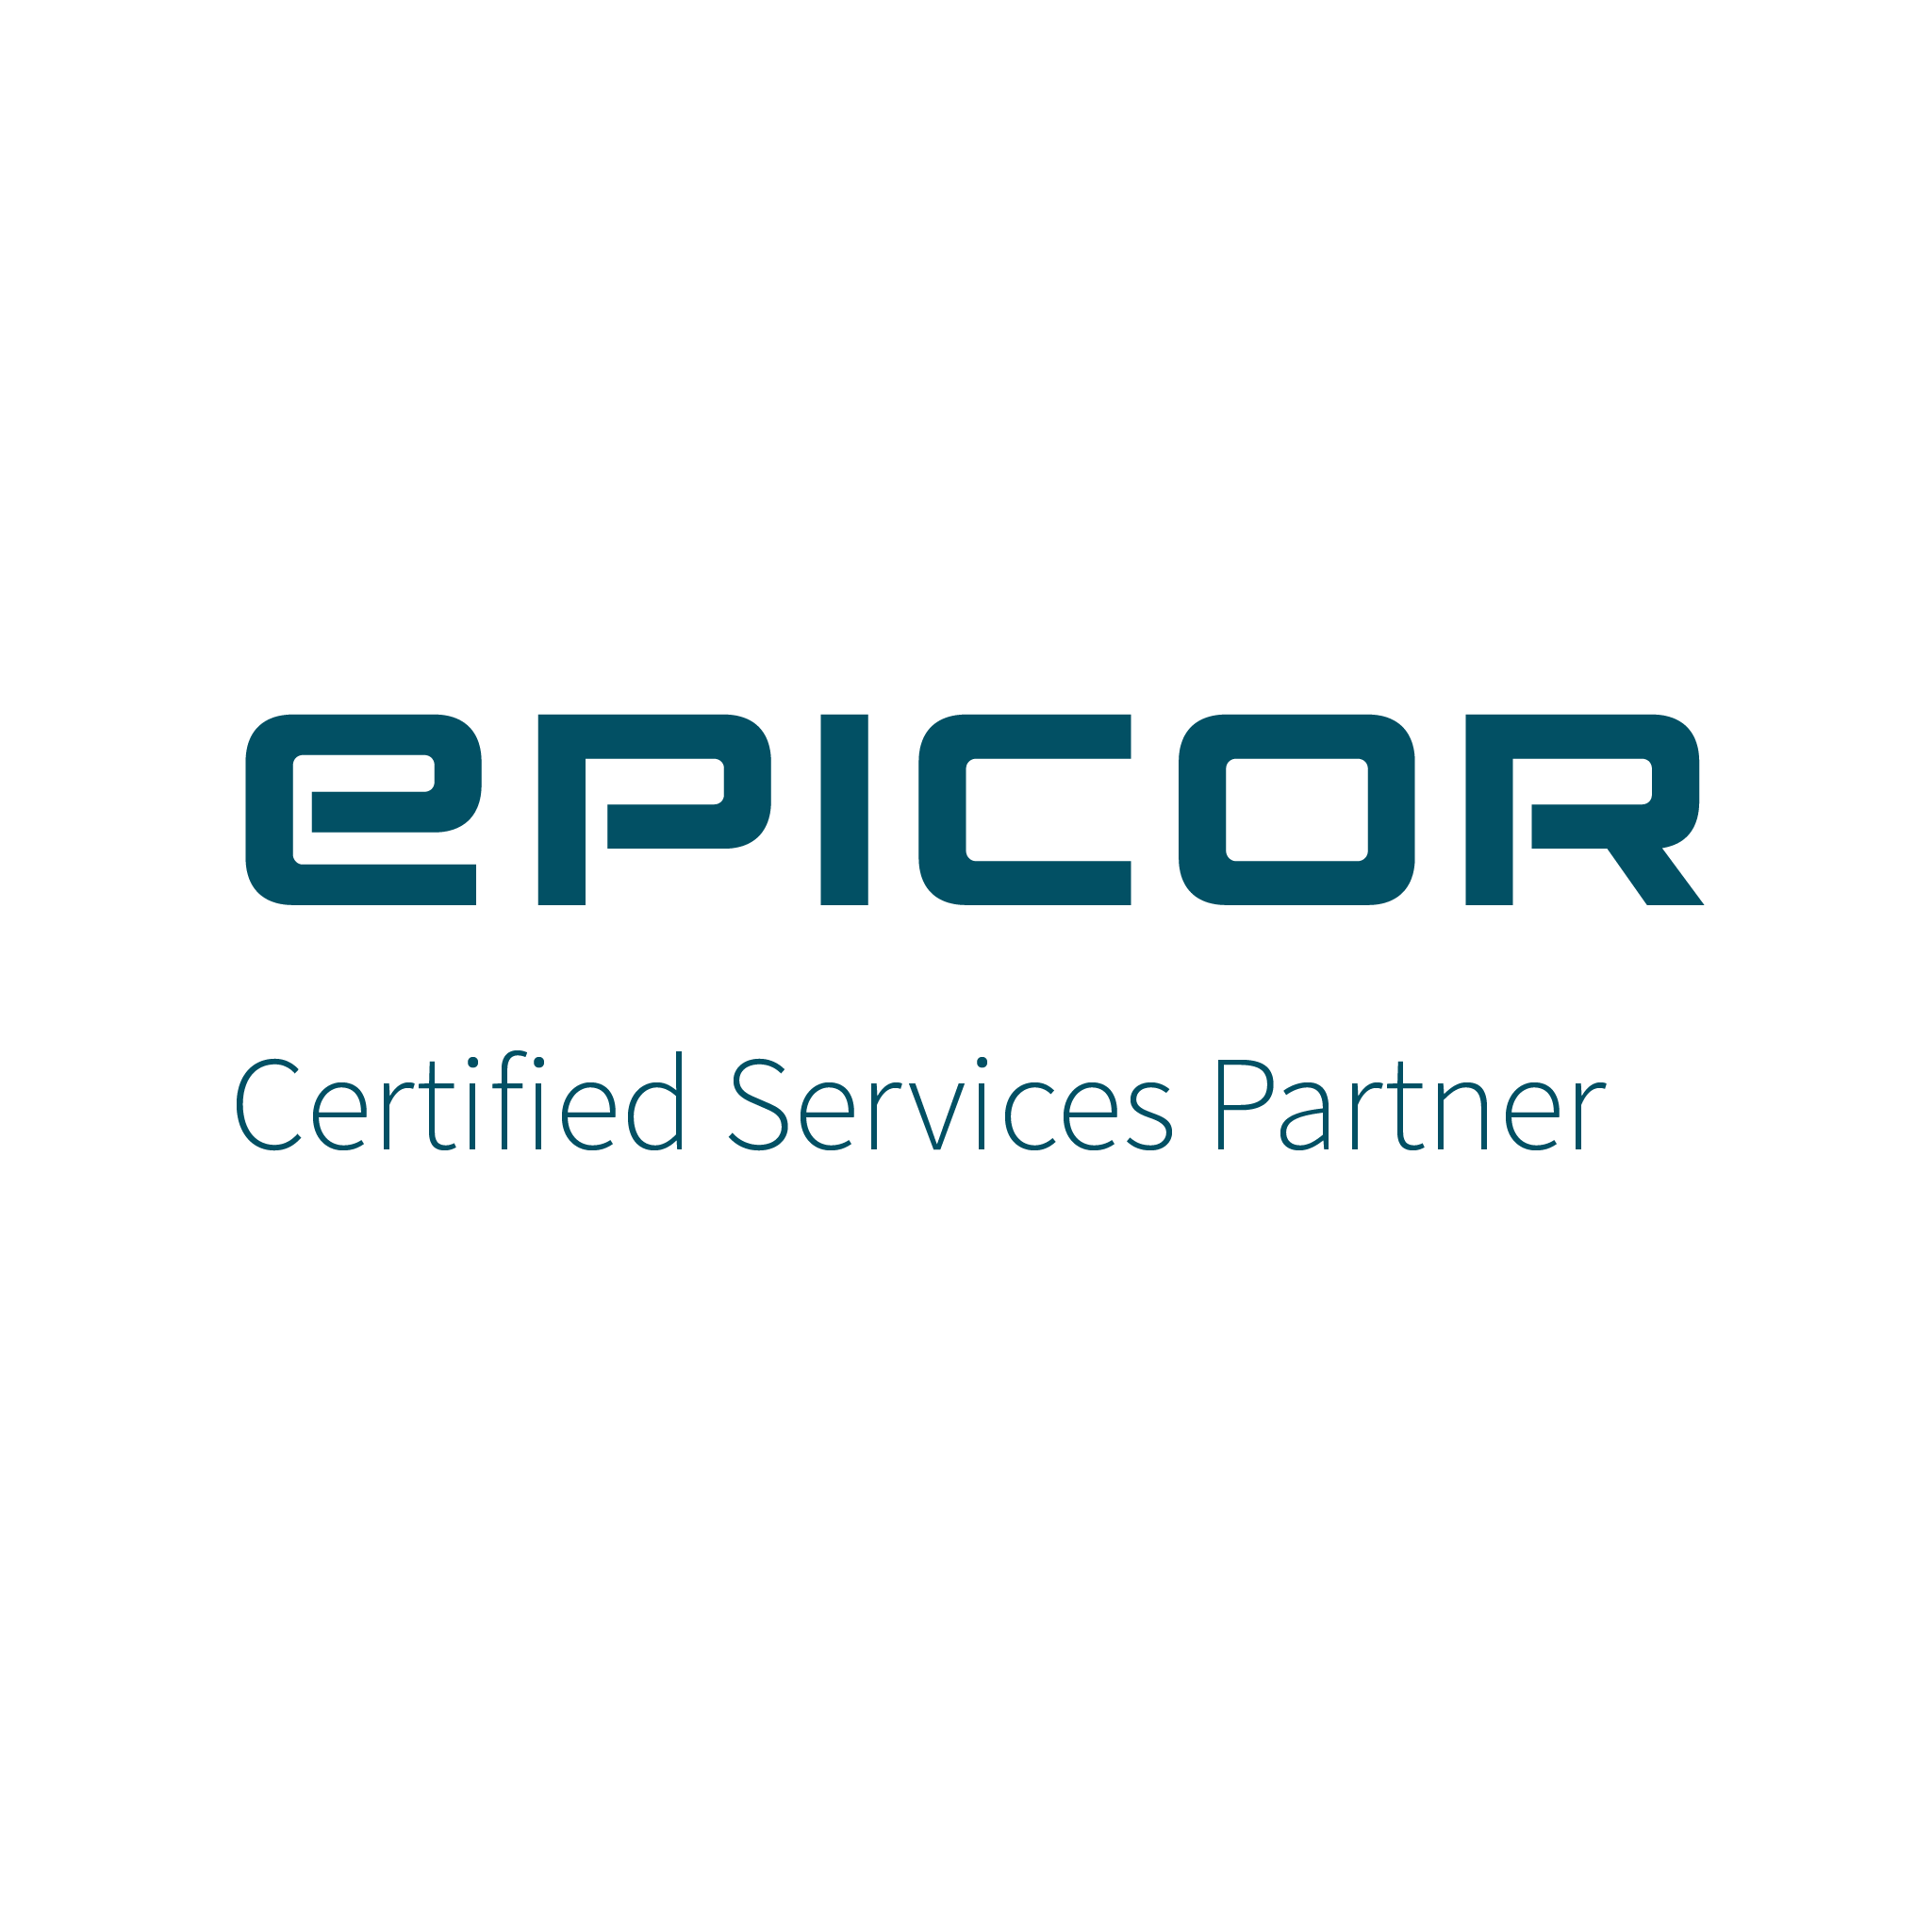 Epicor services partner